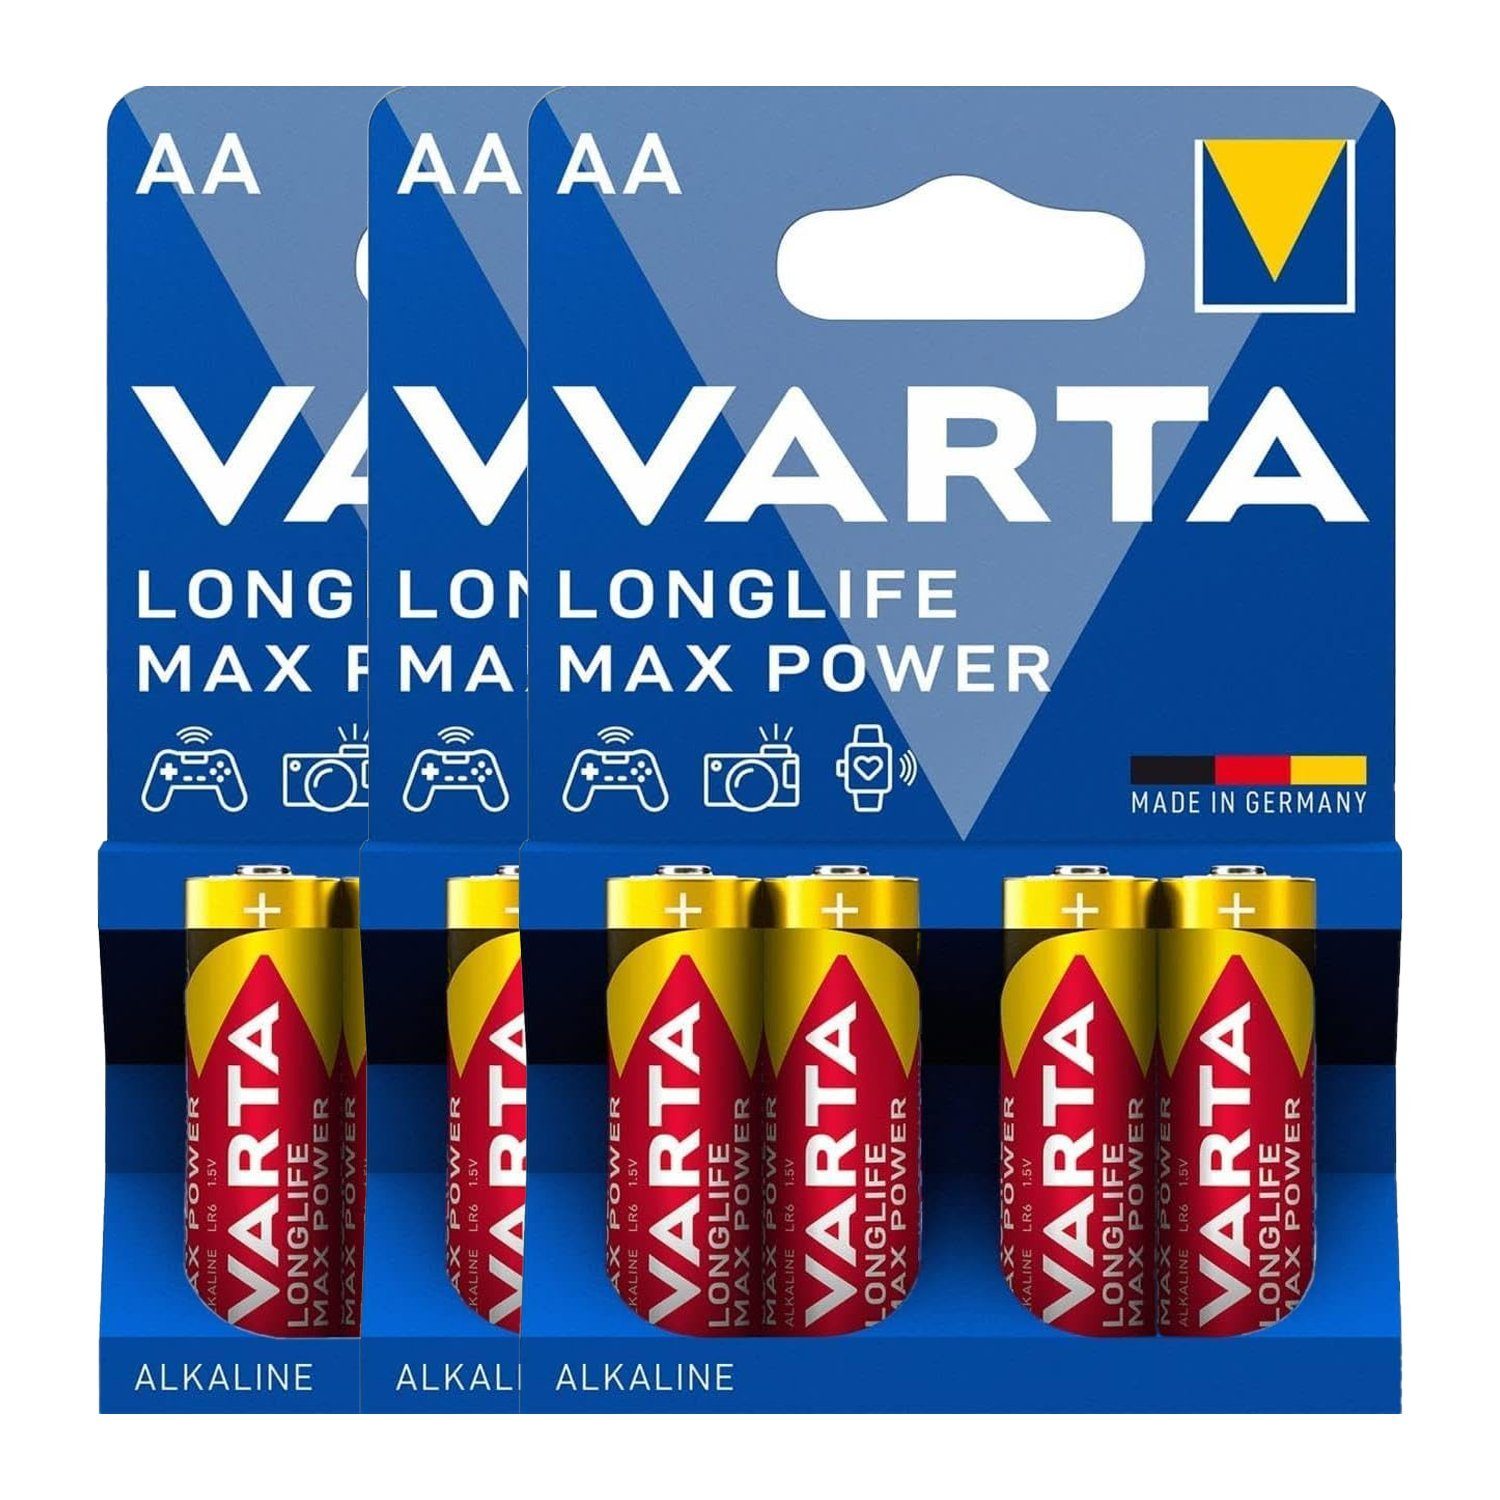 VARTA 12 x VARTA Longlife Max Power 4er 4706 AA Alkaline Batterie Mignon 3 x Batterie